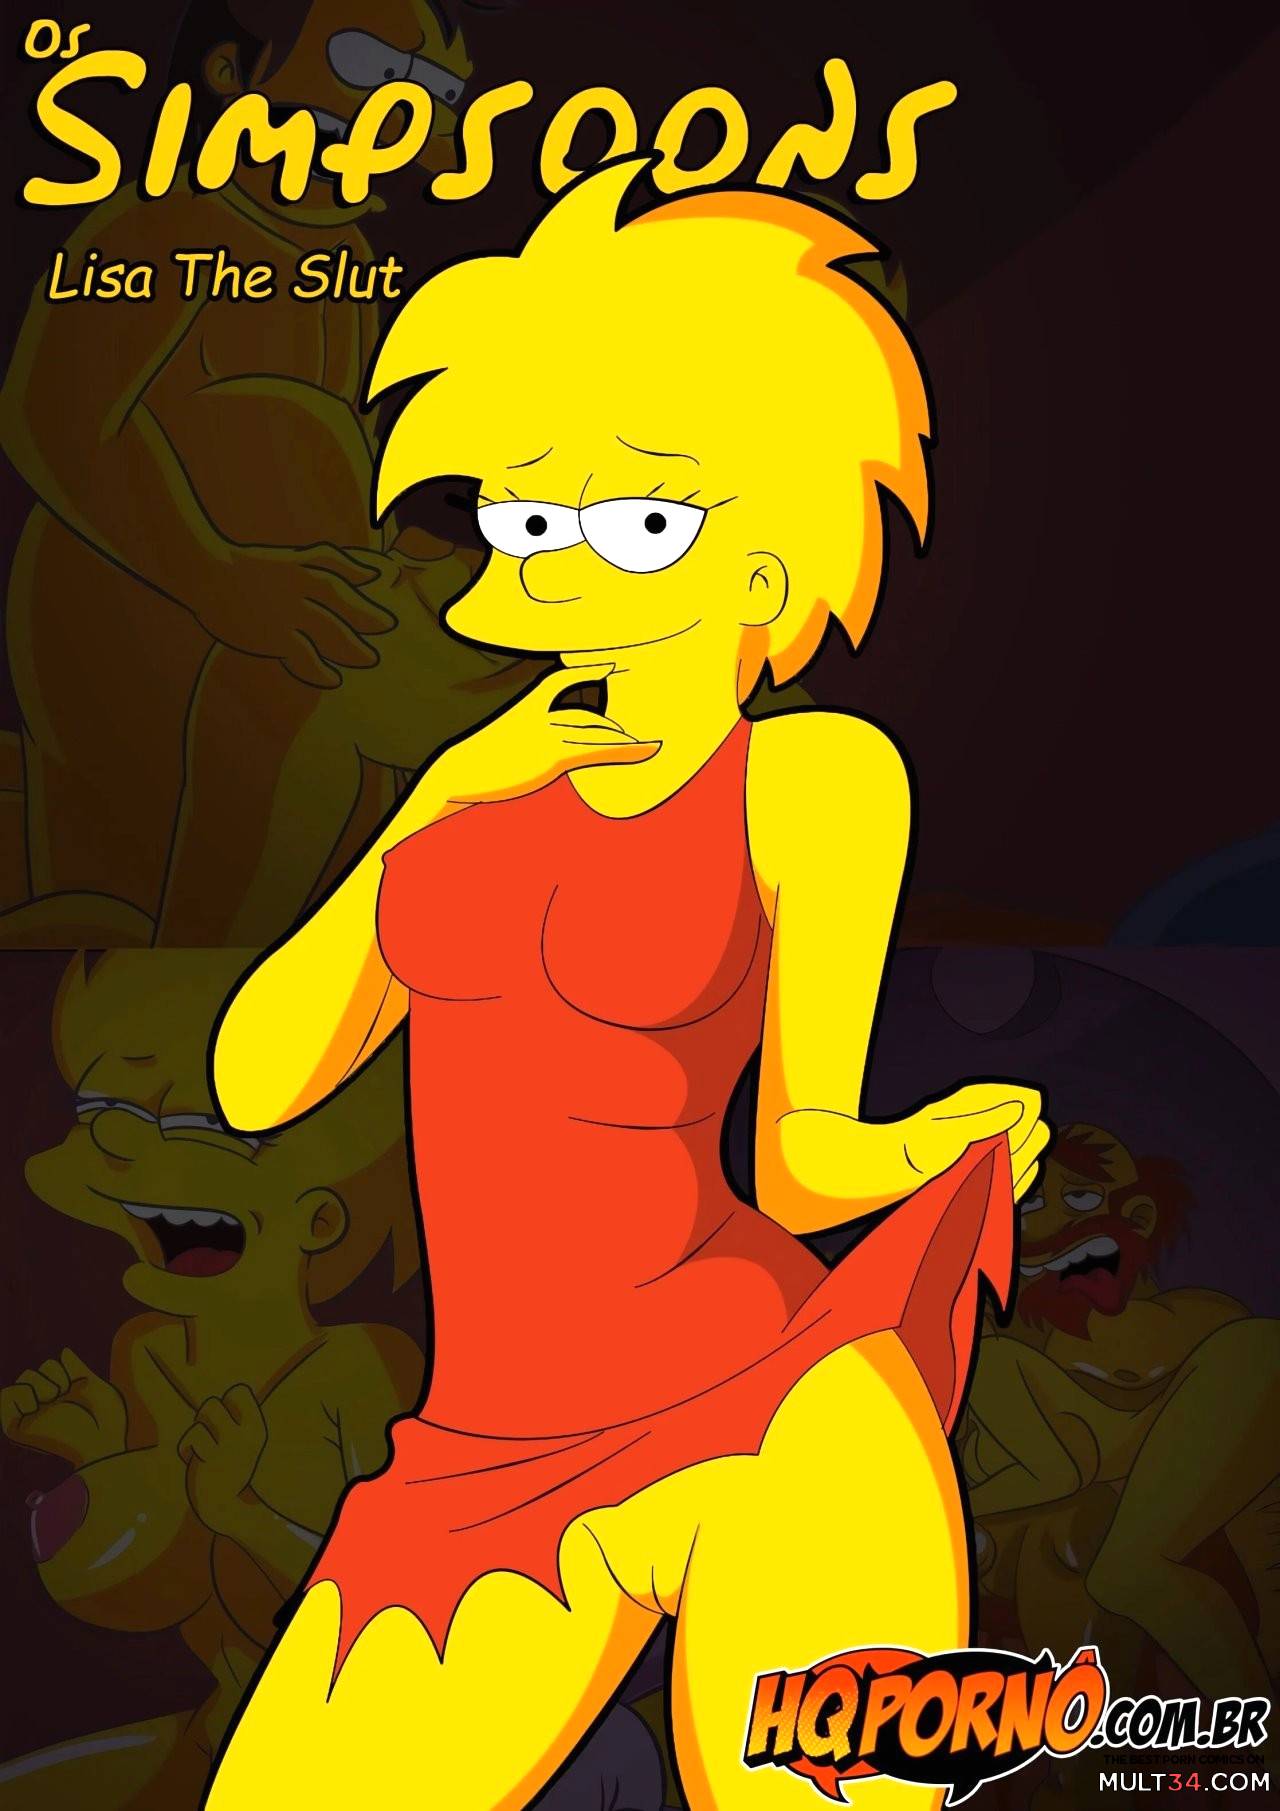 Dirty Cartoon Simpsons Porn Comic - OS Simpsons 3- Lisa The Slut porn comic - the best cartoon porn comics,  Rule 34 | MULT34